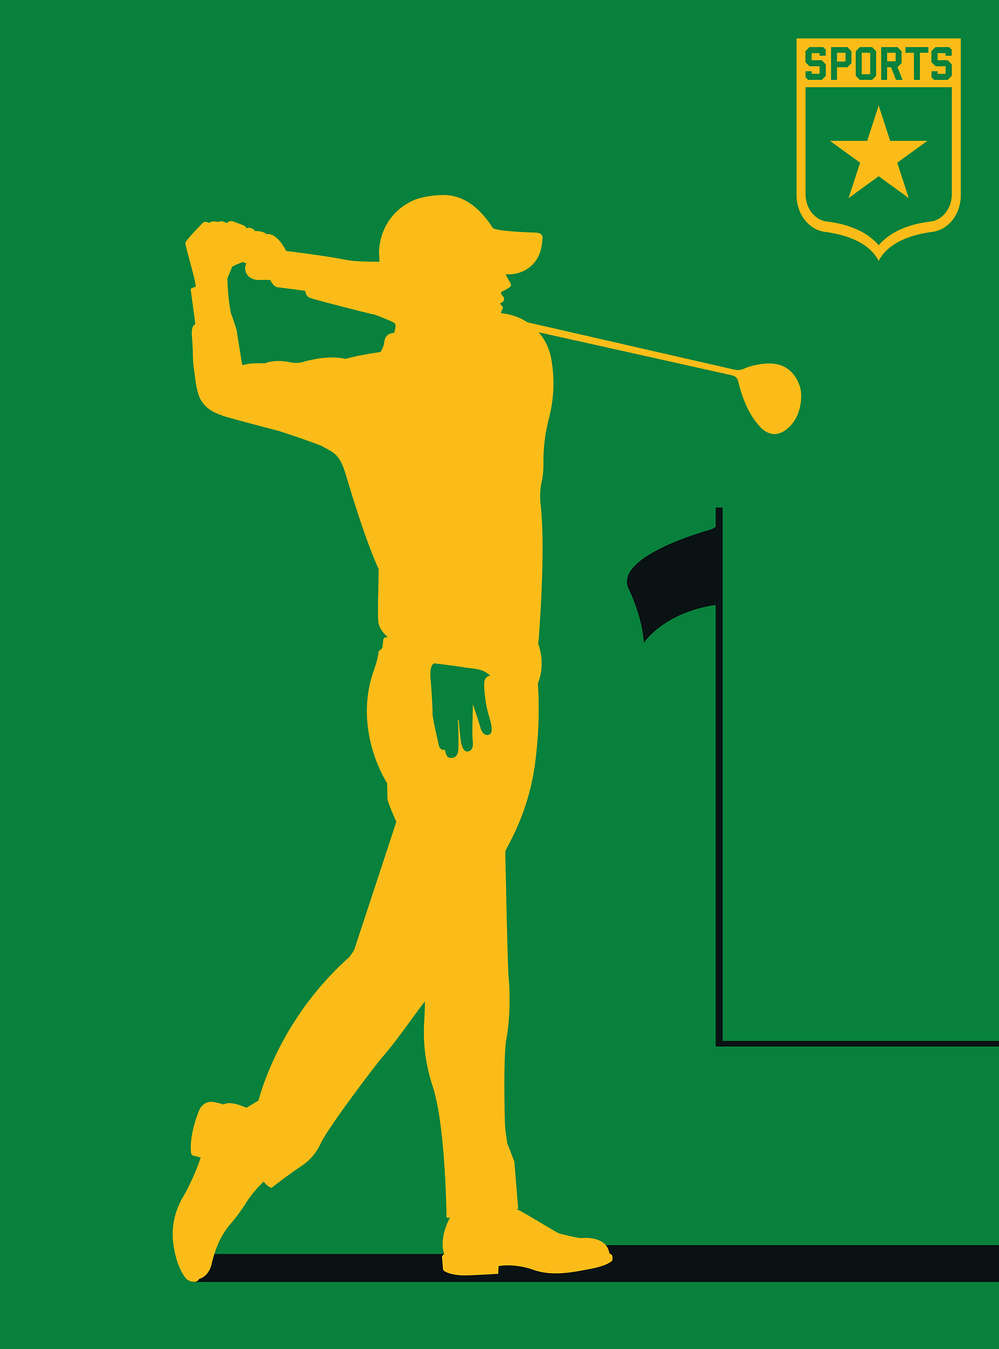             Photo wallpaper sport golf motif player icon
        